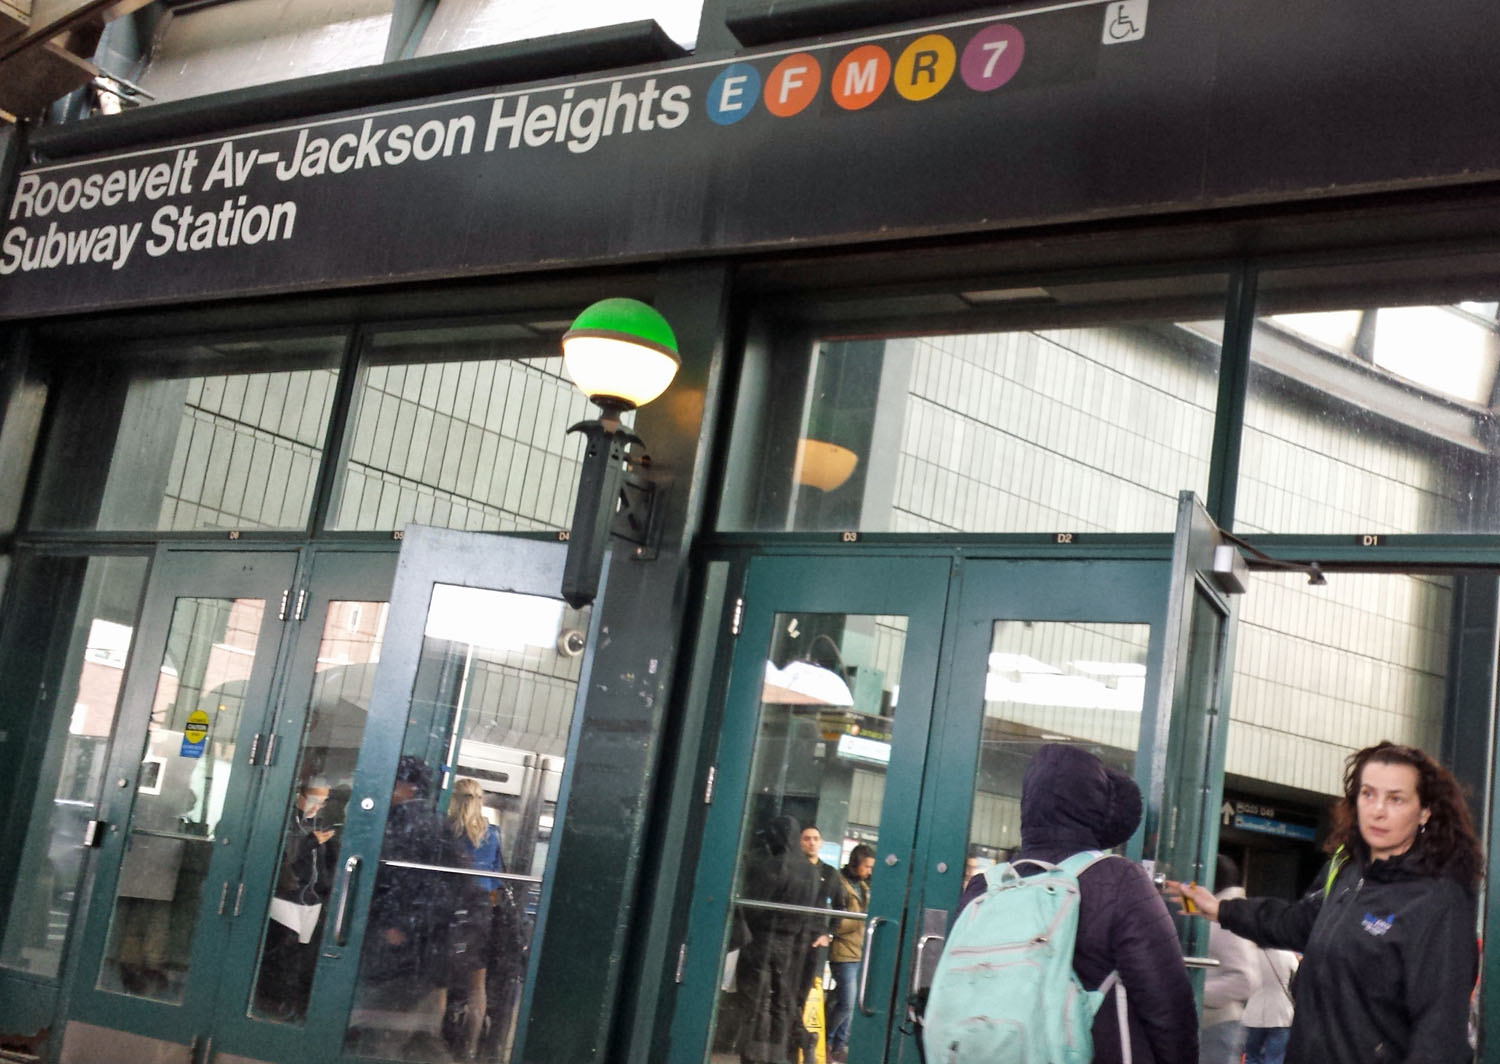 Roosevelt Av - Jackson Heights subway station entrance